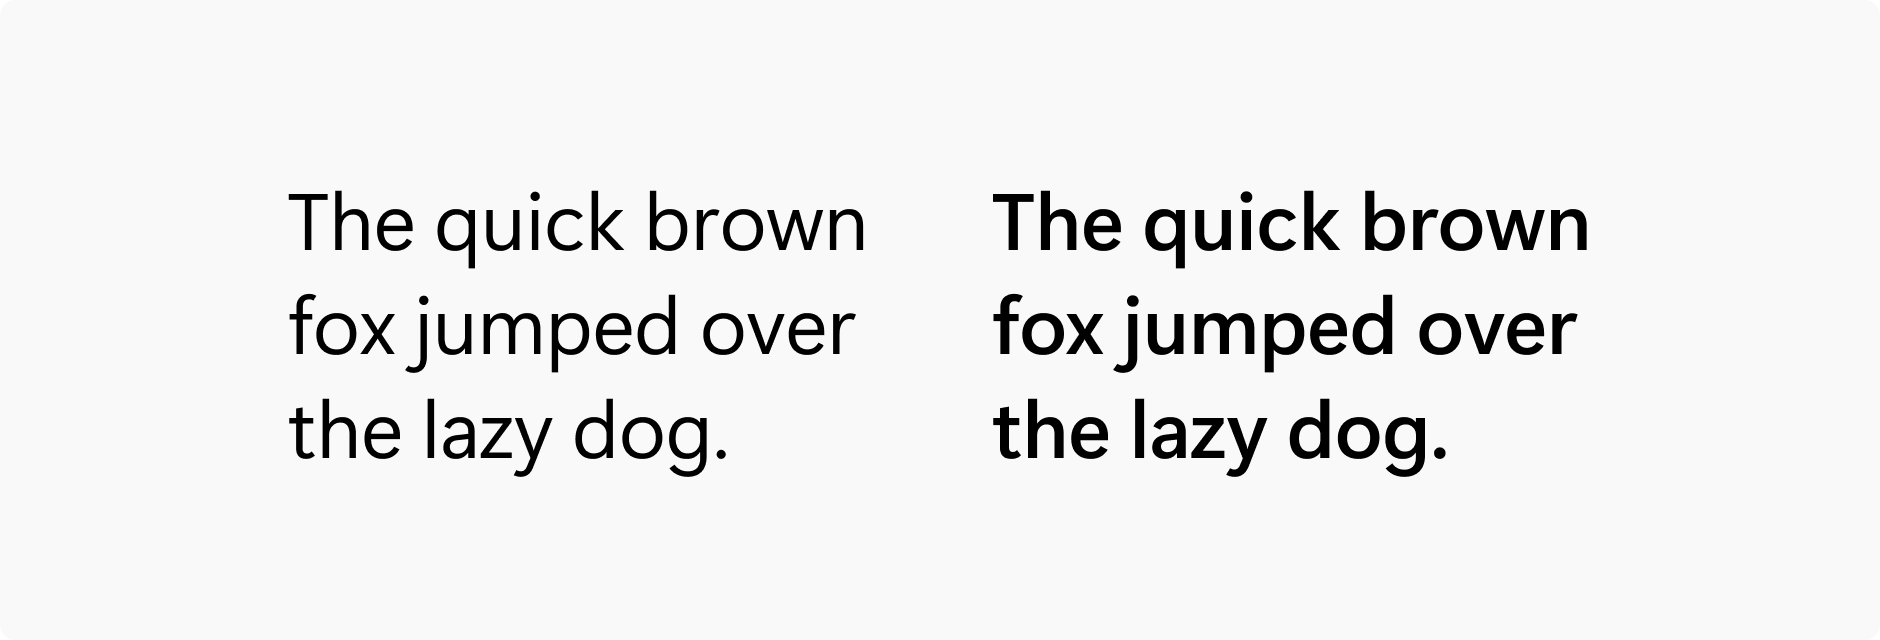 兩個片語「The quick brown fox jumped over the lazy dog」並排。右側的片語字體加粗。